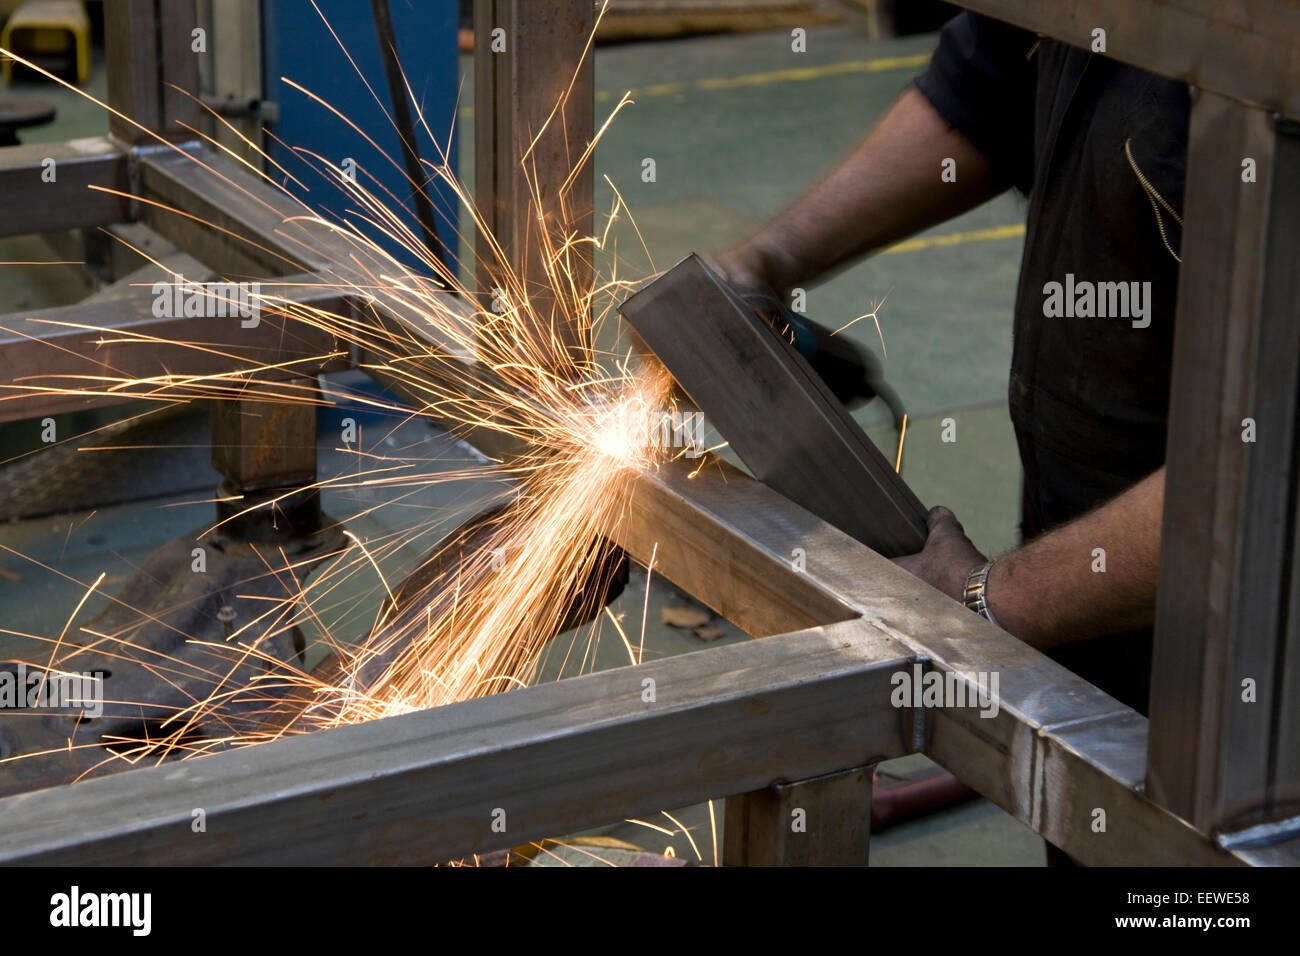 Metal fabricator grinding steel before welding making showers of sparks Stock Photo